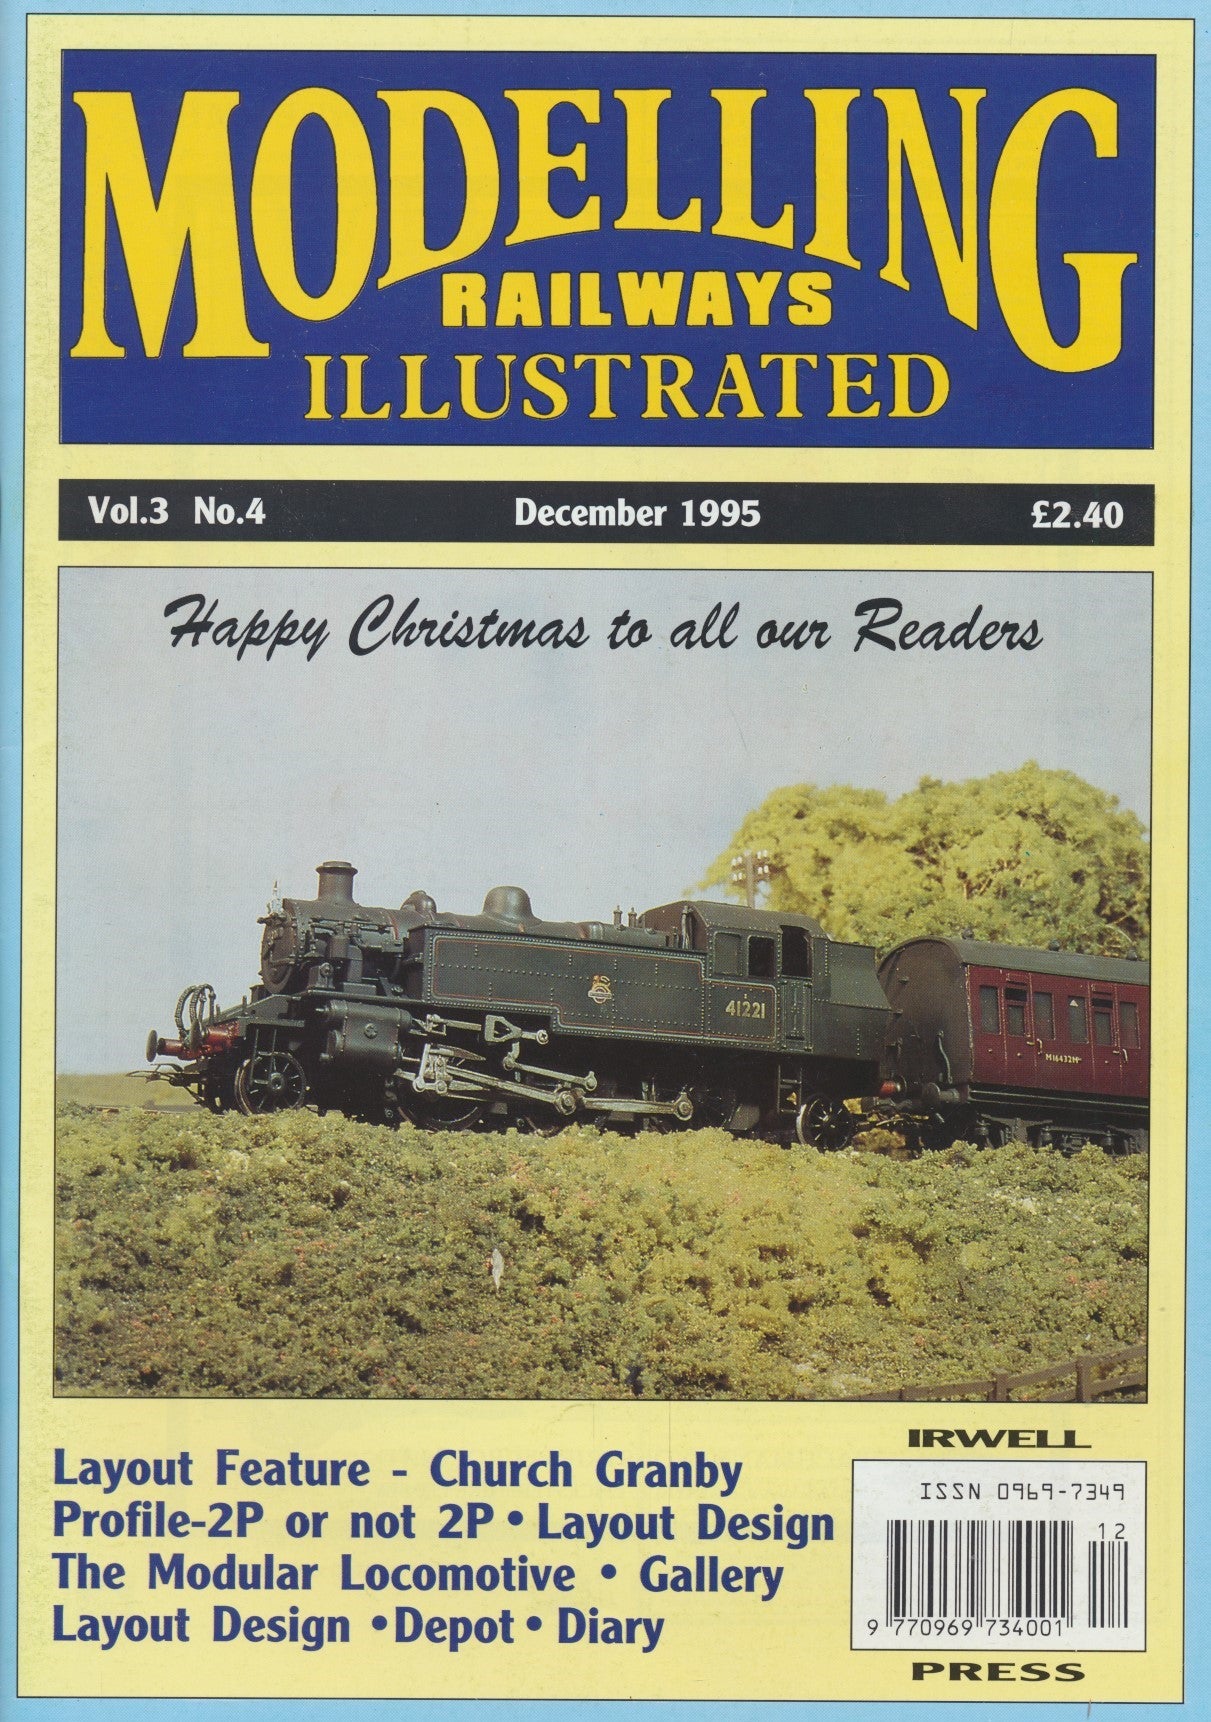 Modelling Railways Illustrated: Vol. 3 No. 4 - December 1995